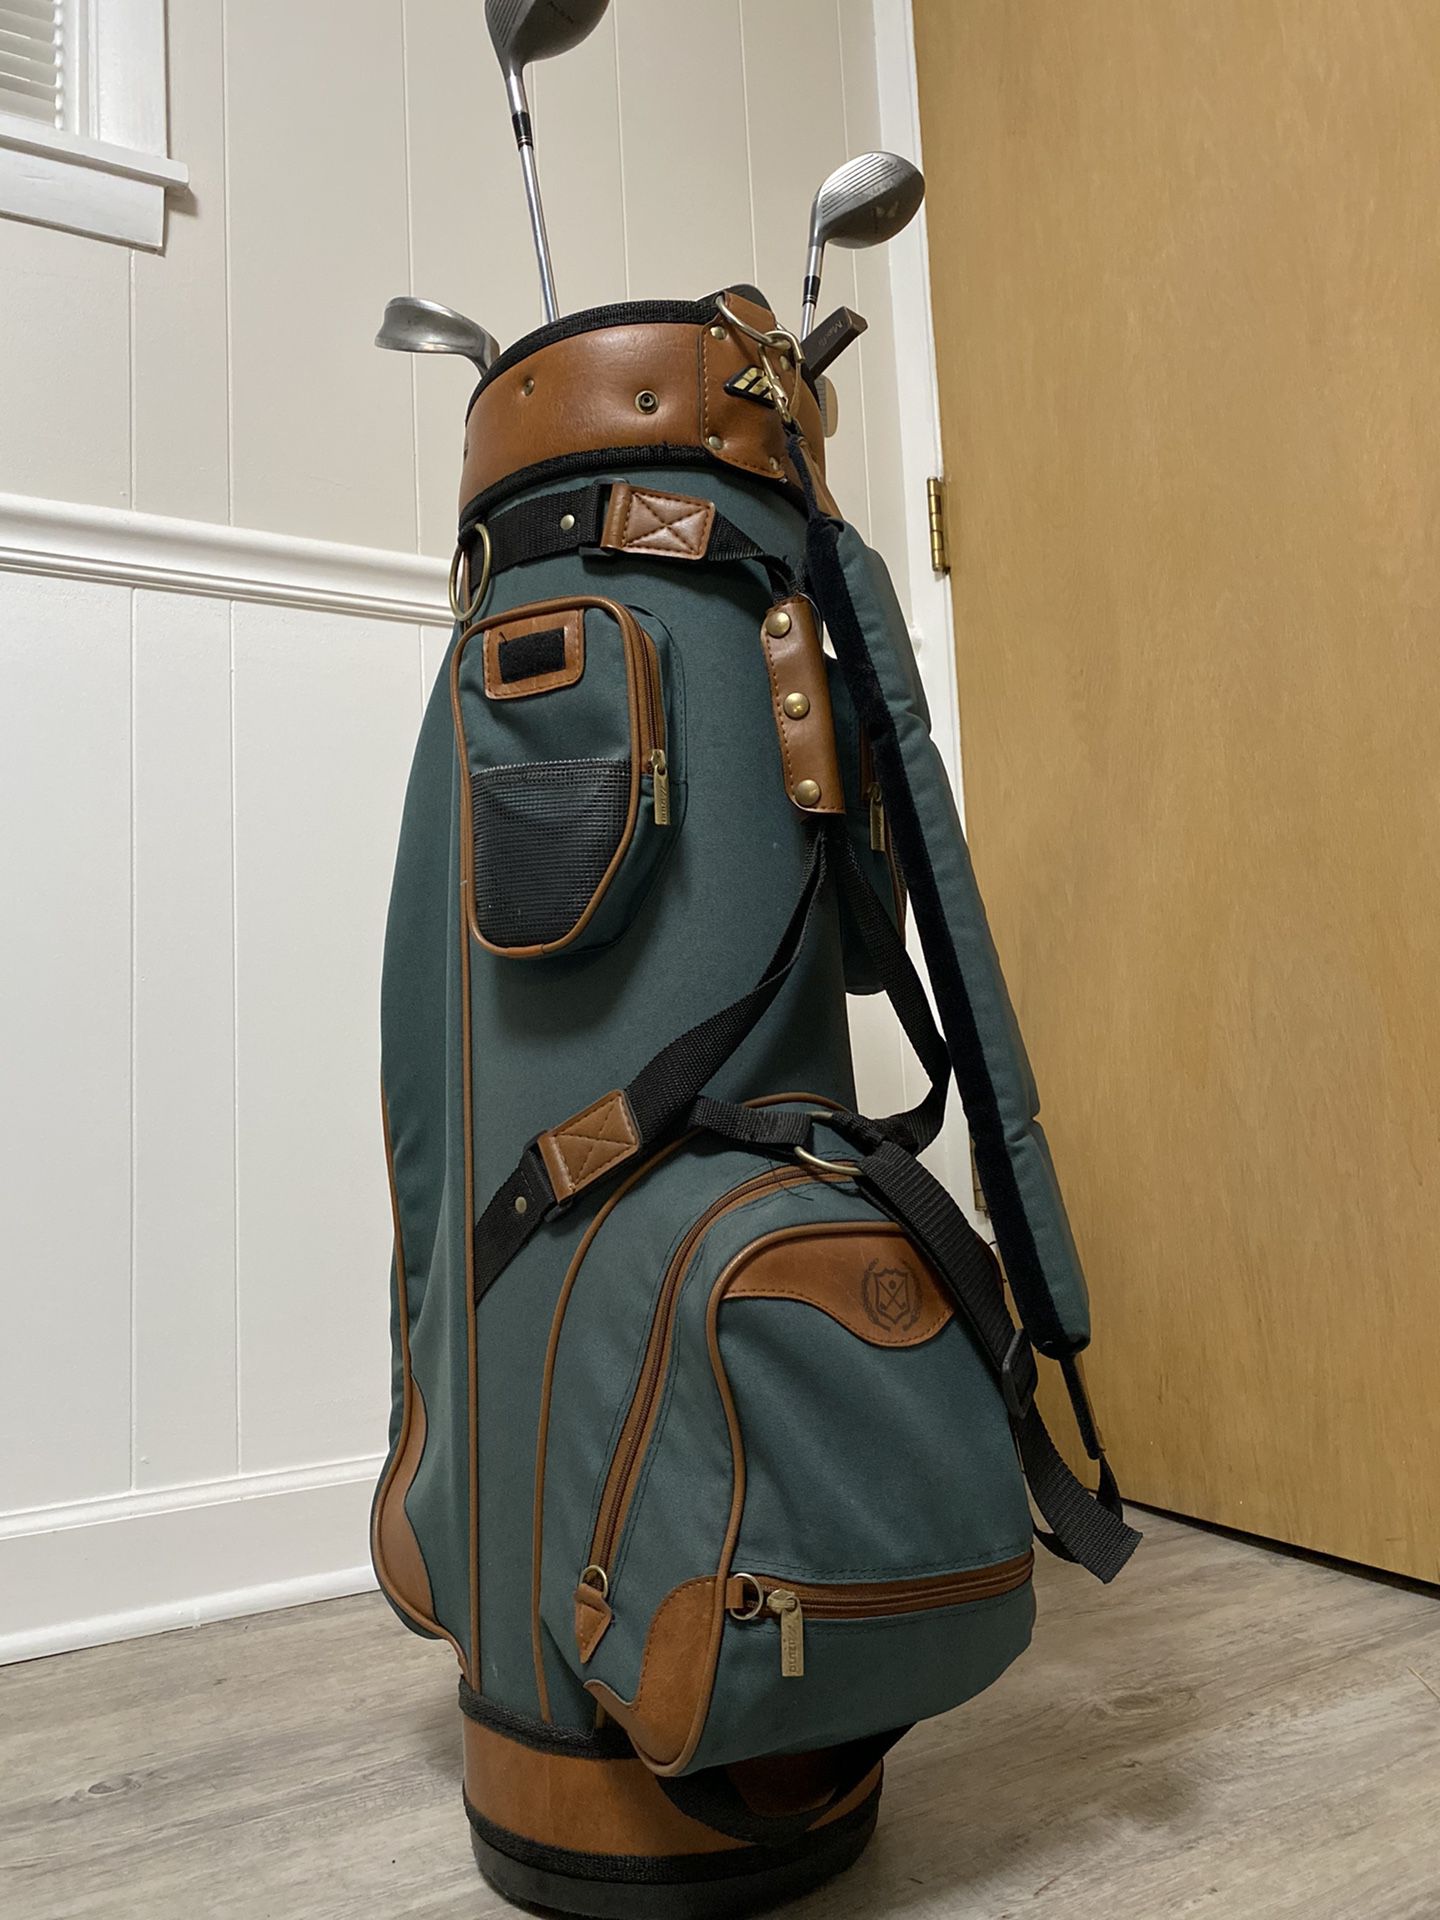 Ladies Golf Club Set - Wilson, Beth Daniel Irons and Mizuno Golf Bag